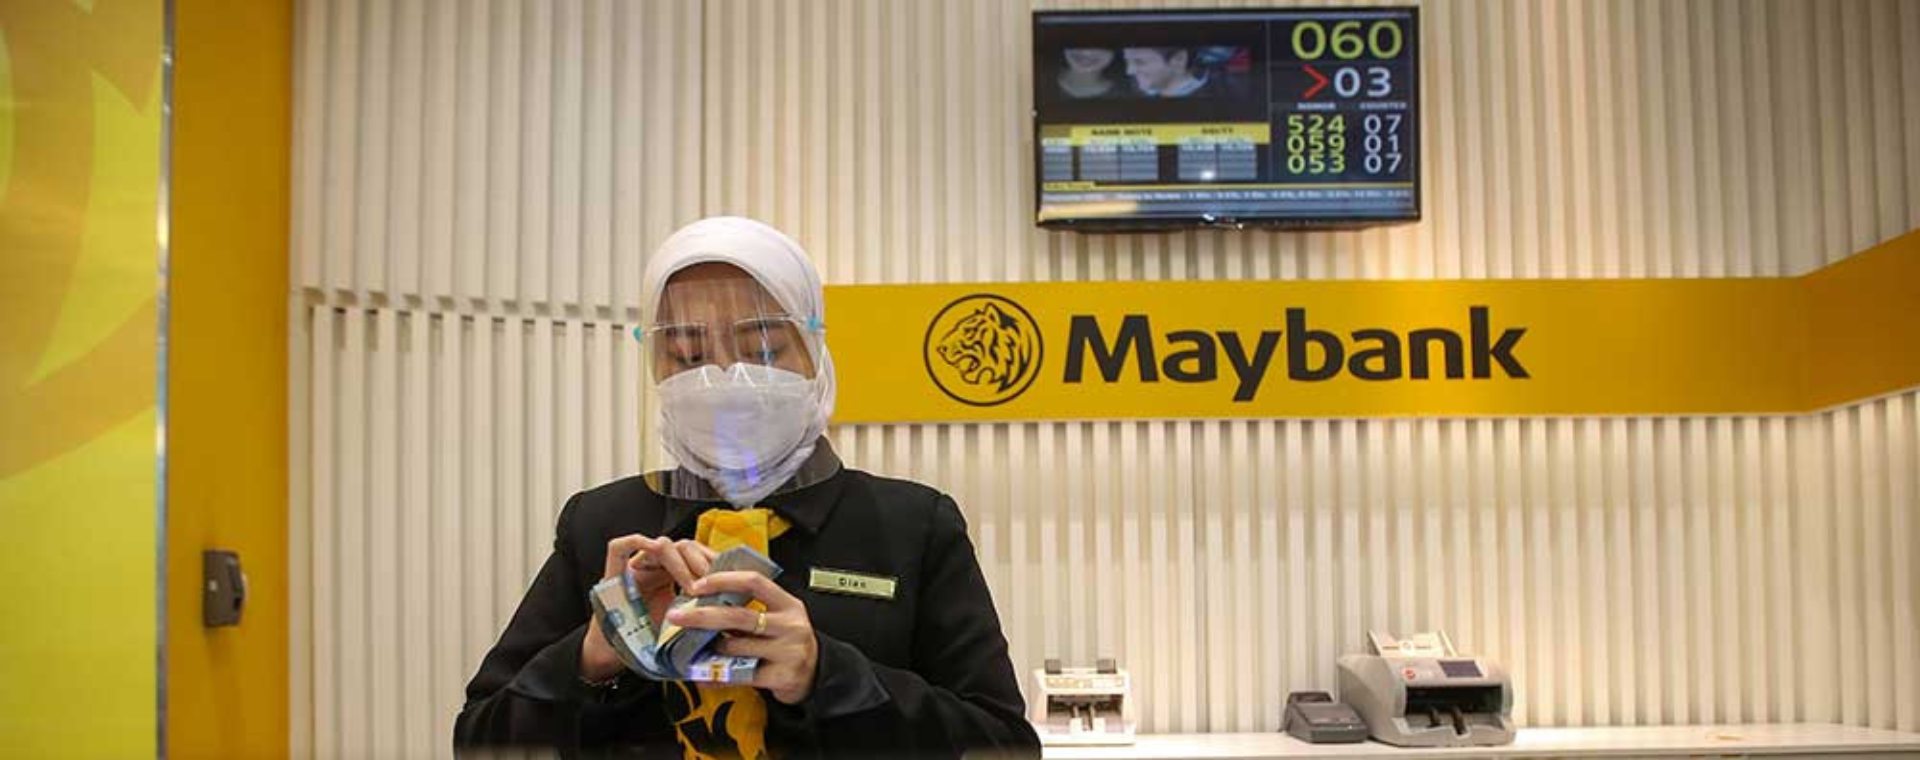  Historia Bisnis: Maybank Hampir Rugi Saat Akuisisi Bank Internasional Indonesia